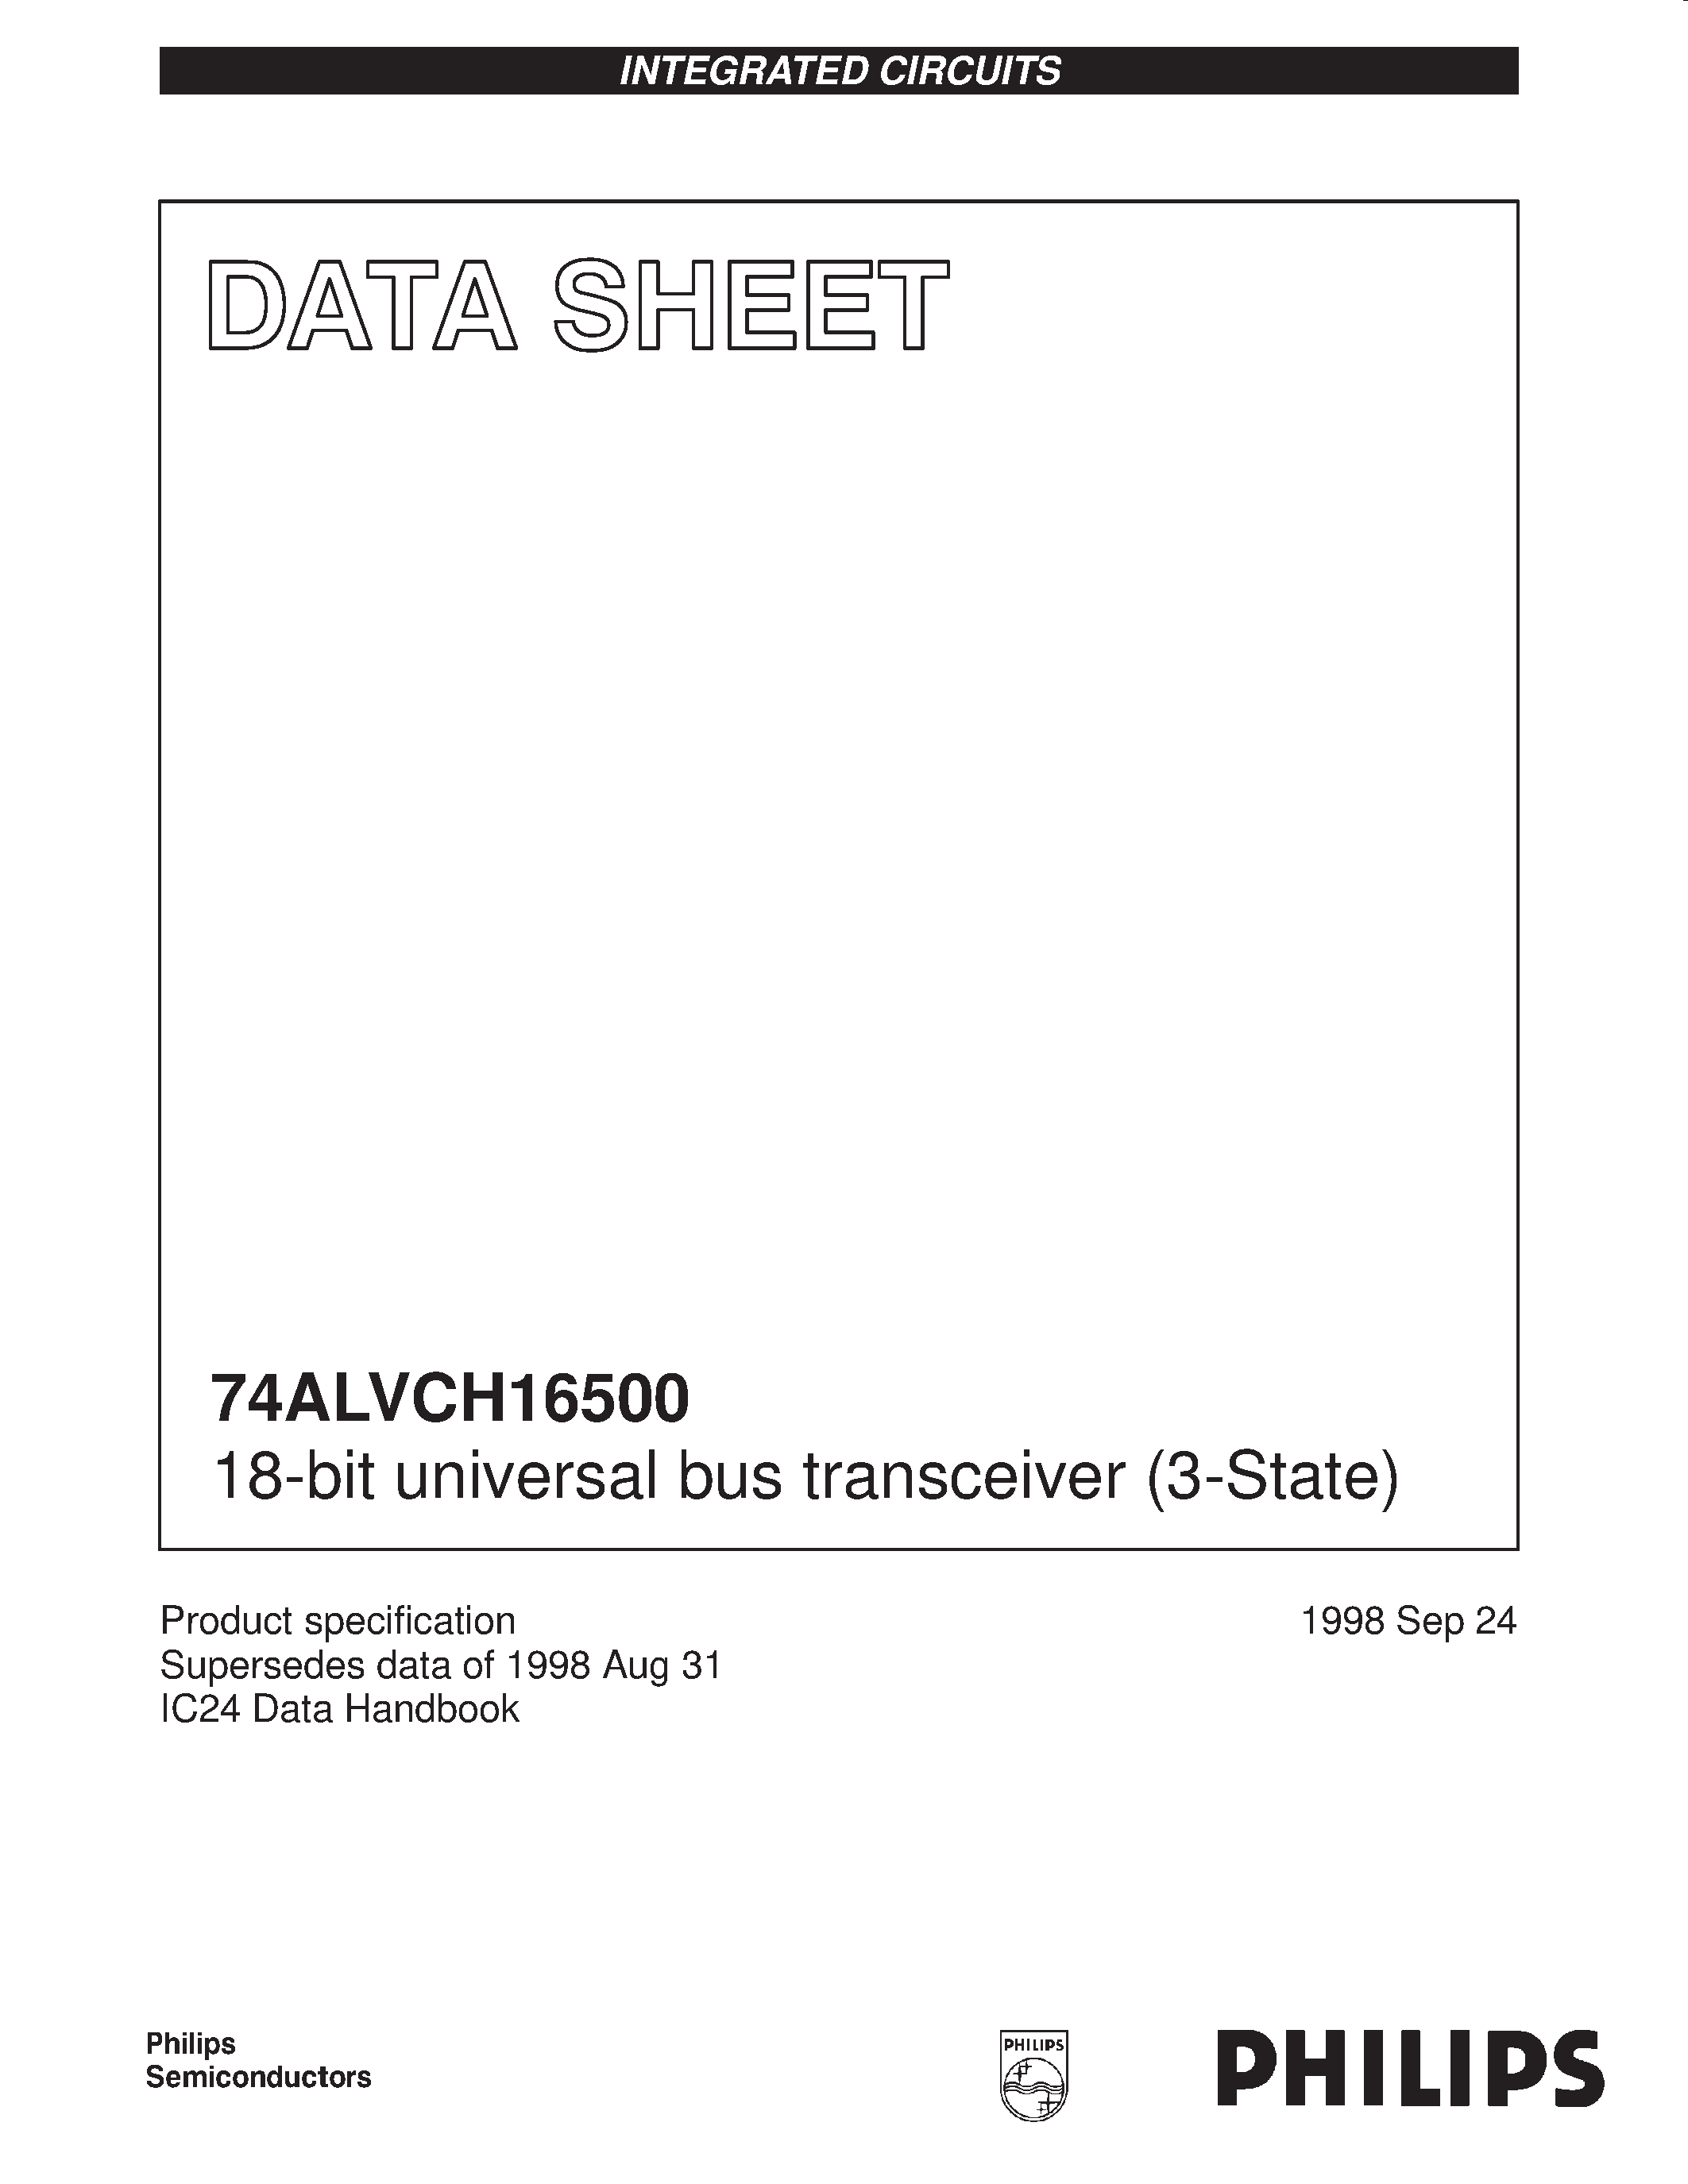 Даташит 74ALVCH16500 - 18-bit universal bus transceiver 3-State страница 1